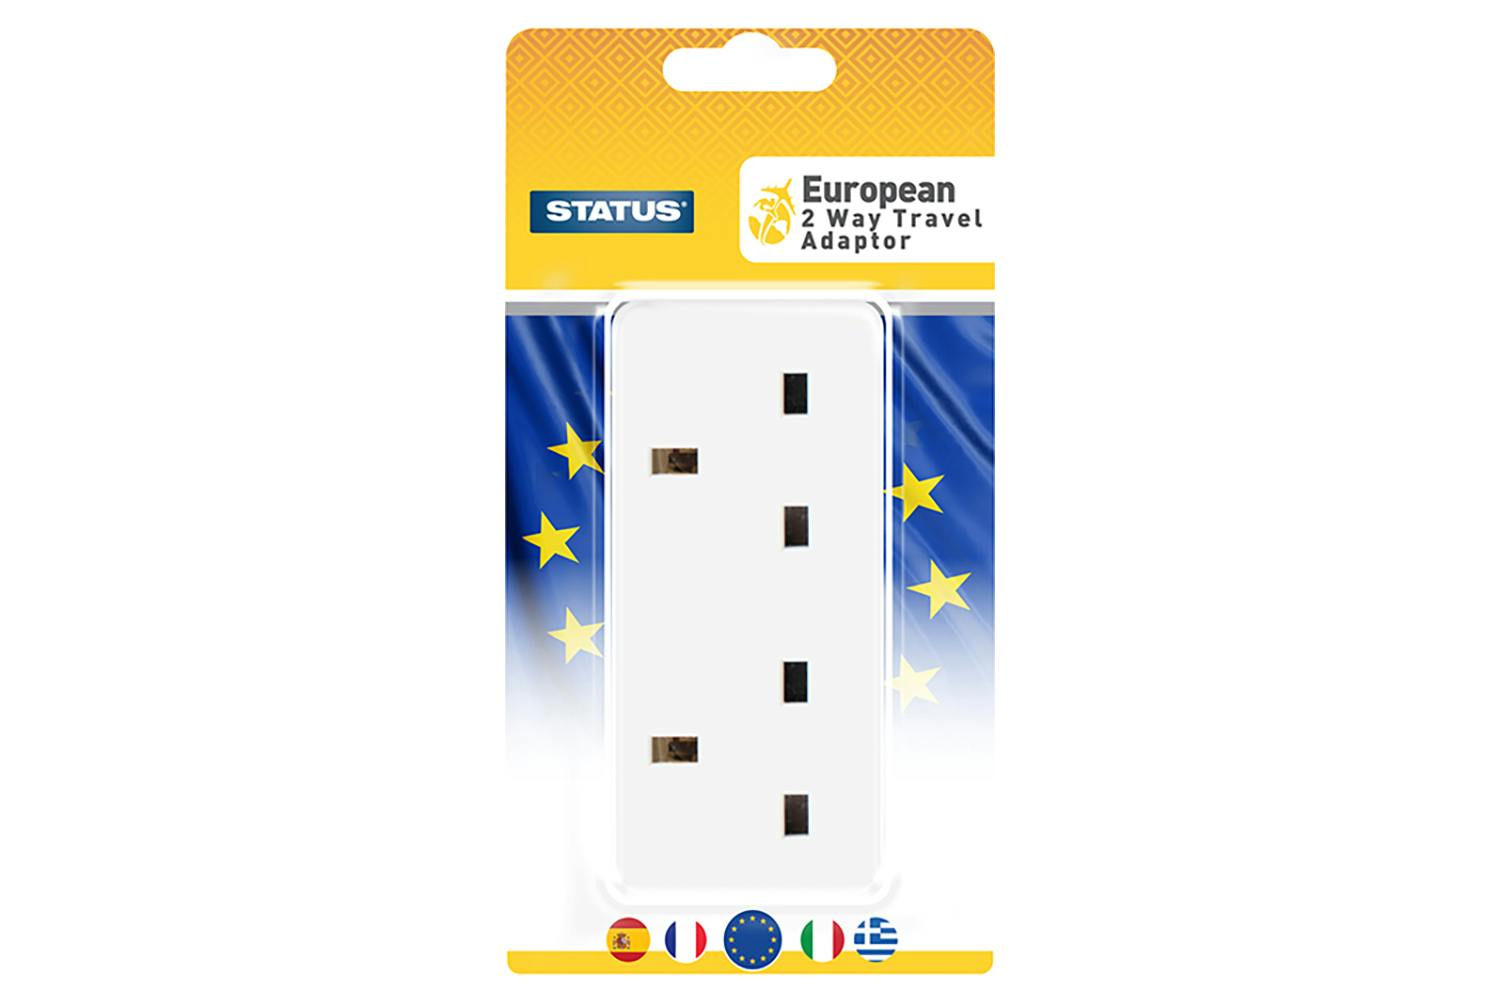 Status European 2 Way Travel Adapter